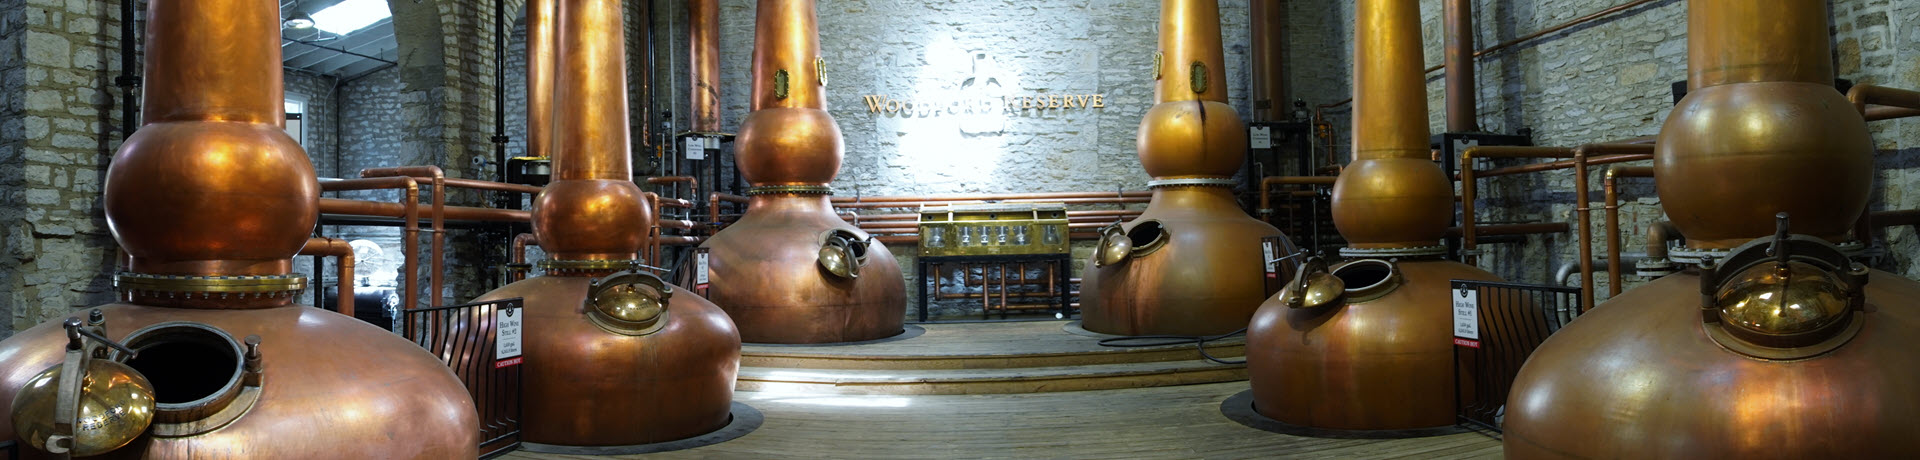 Woodford Reserve Distillery - The New Forsyth Copper Pot Stills